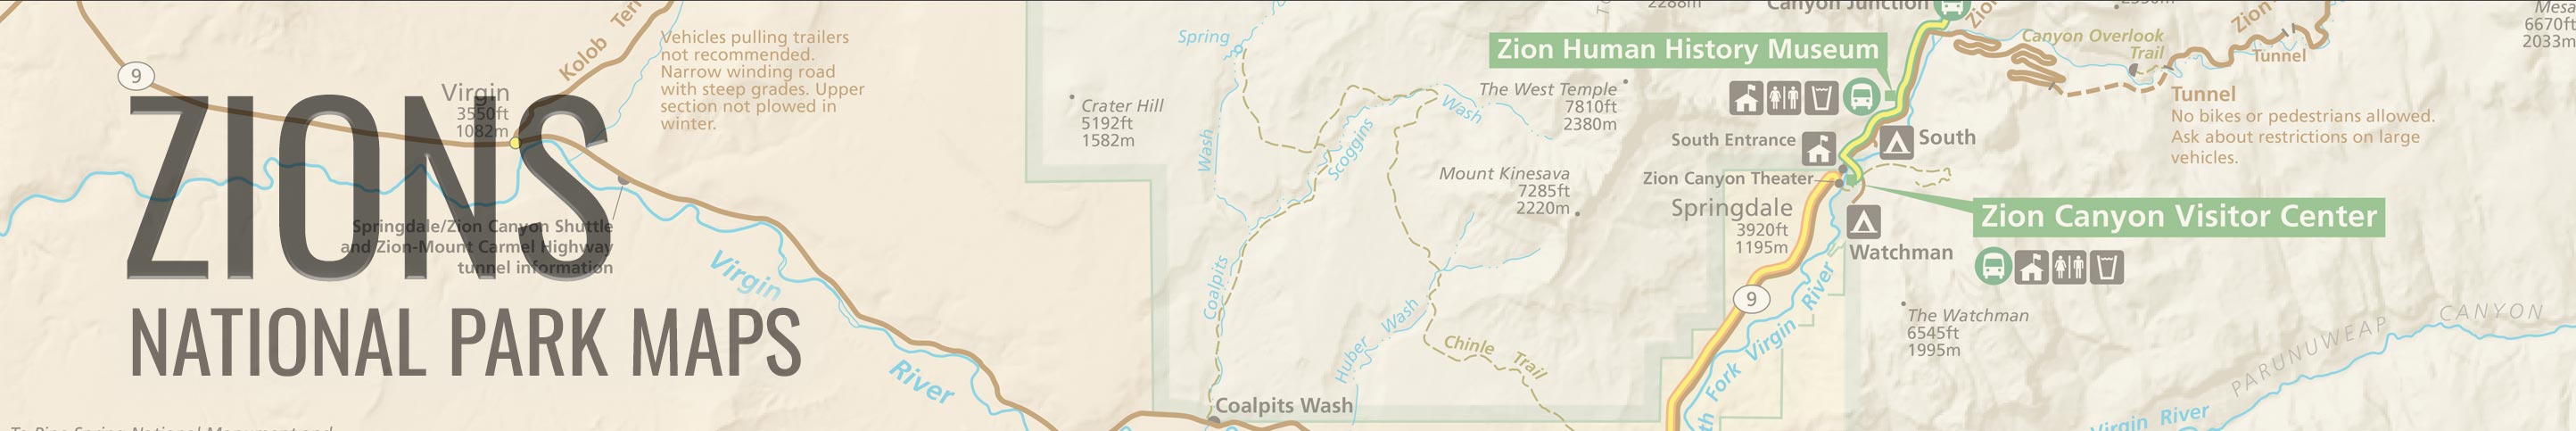 zions-national-park-maps-header